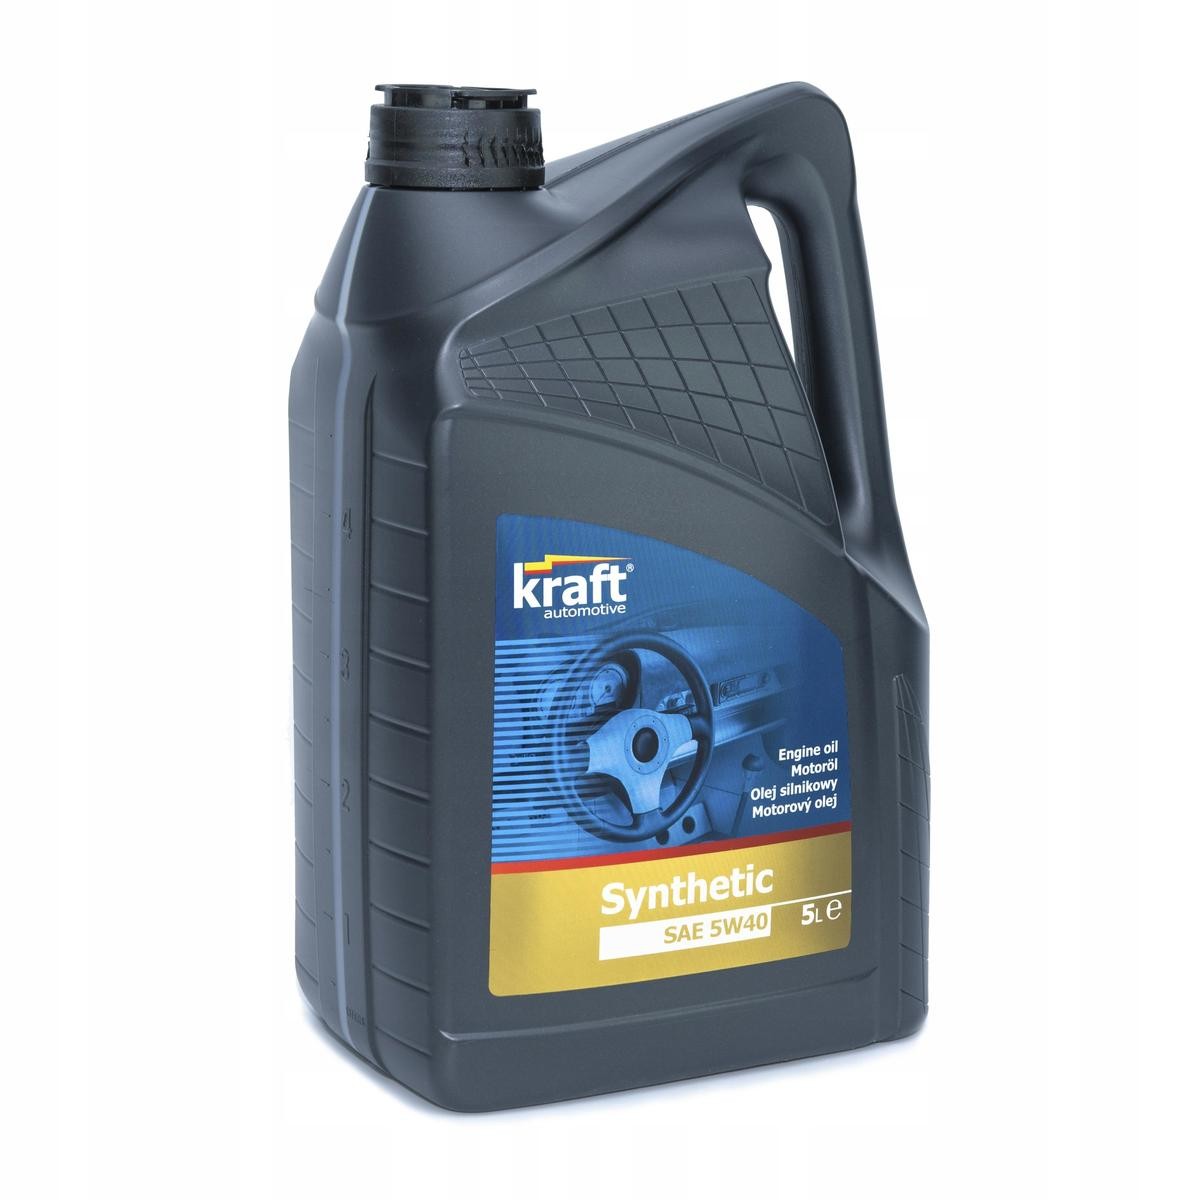 Comprar Aceite motor KRAFT K0010858 Synthetic 5W-40, 5L